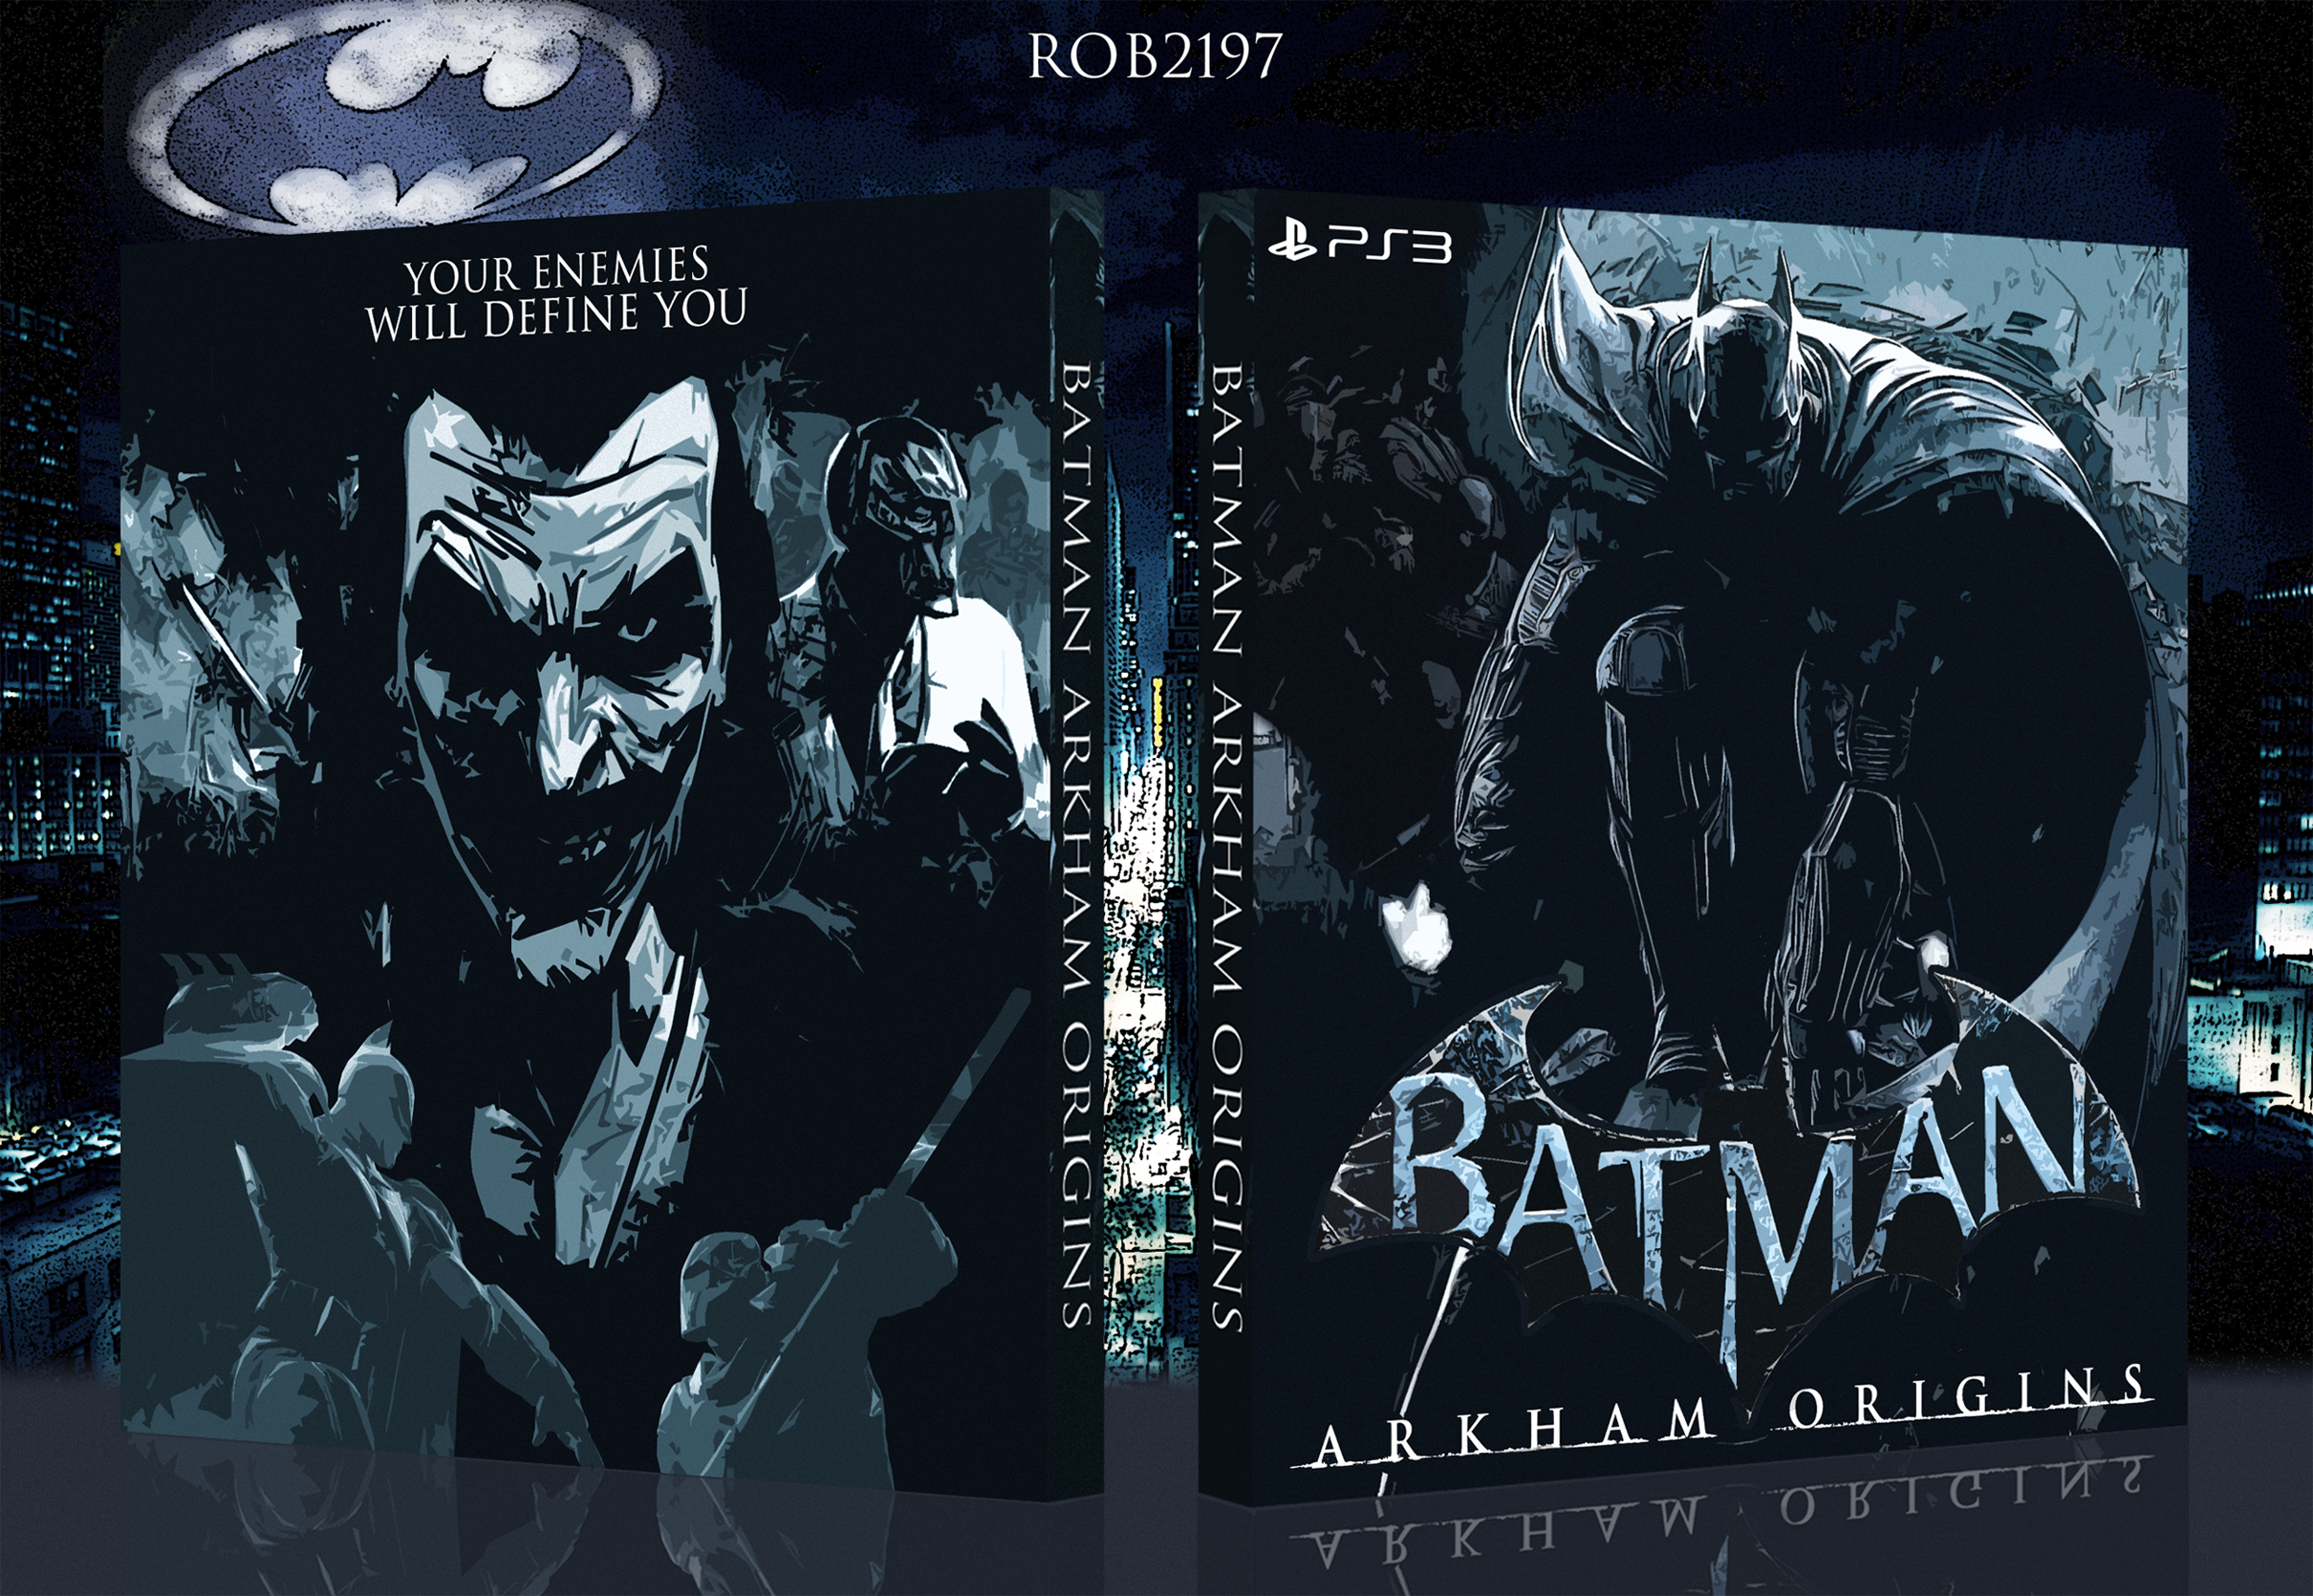 Batman Arkham Origins PlayStation 3 Box Art Cover by rob2197